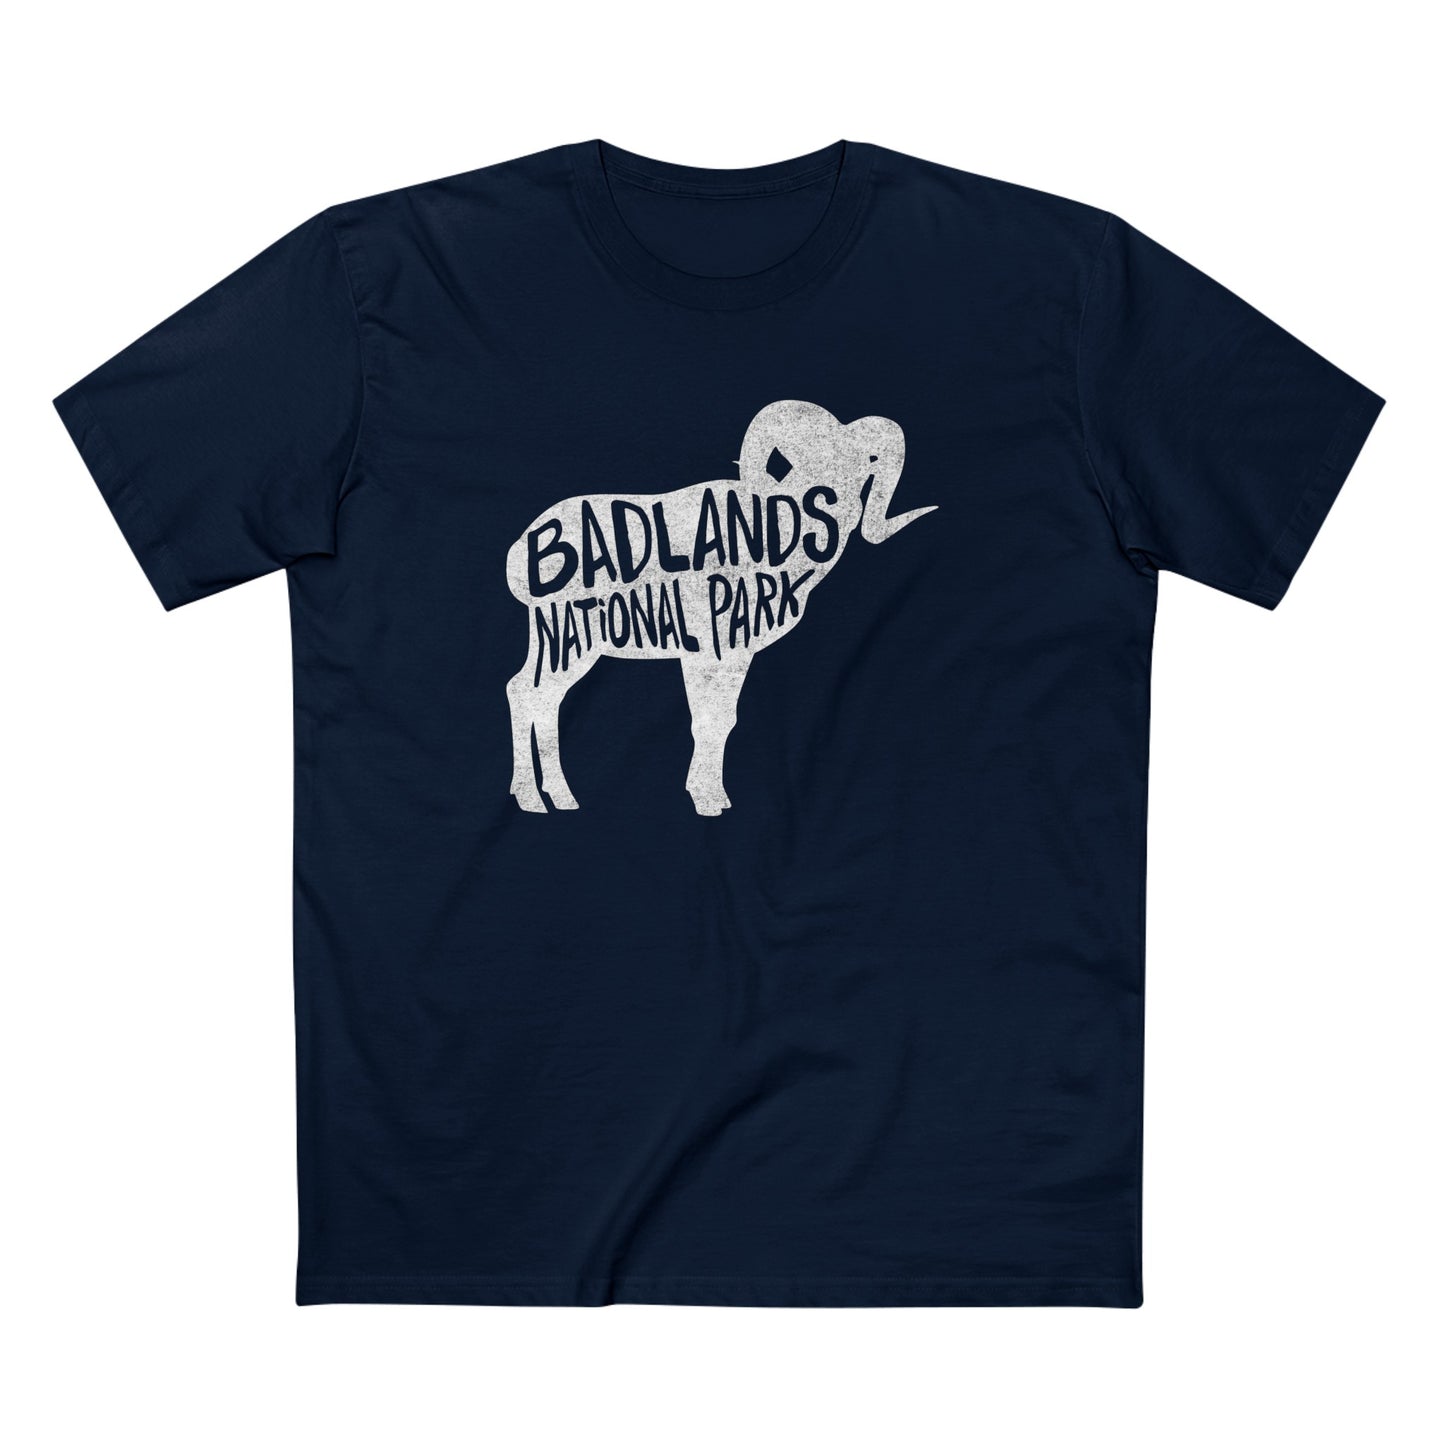 Badlands National Park T-Shirt - Bighorn Sheep